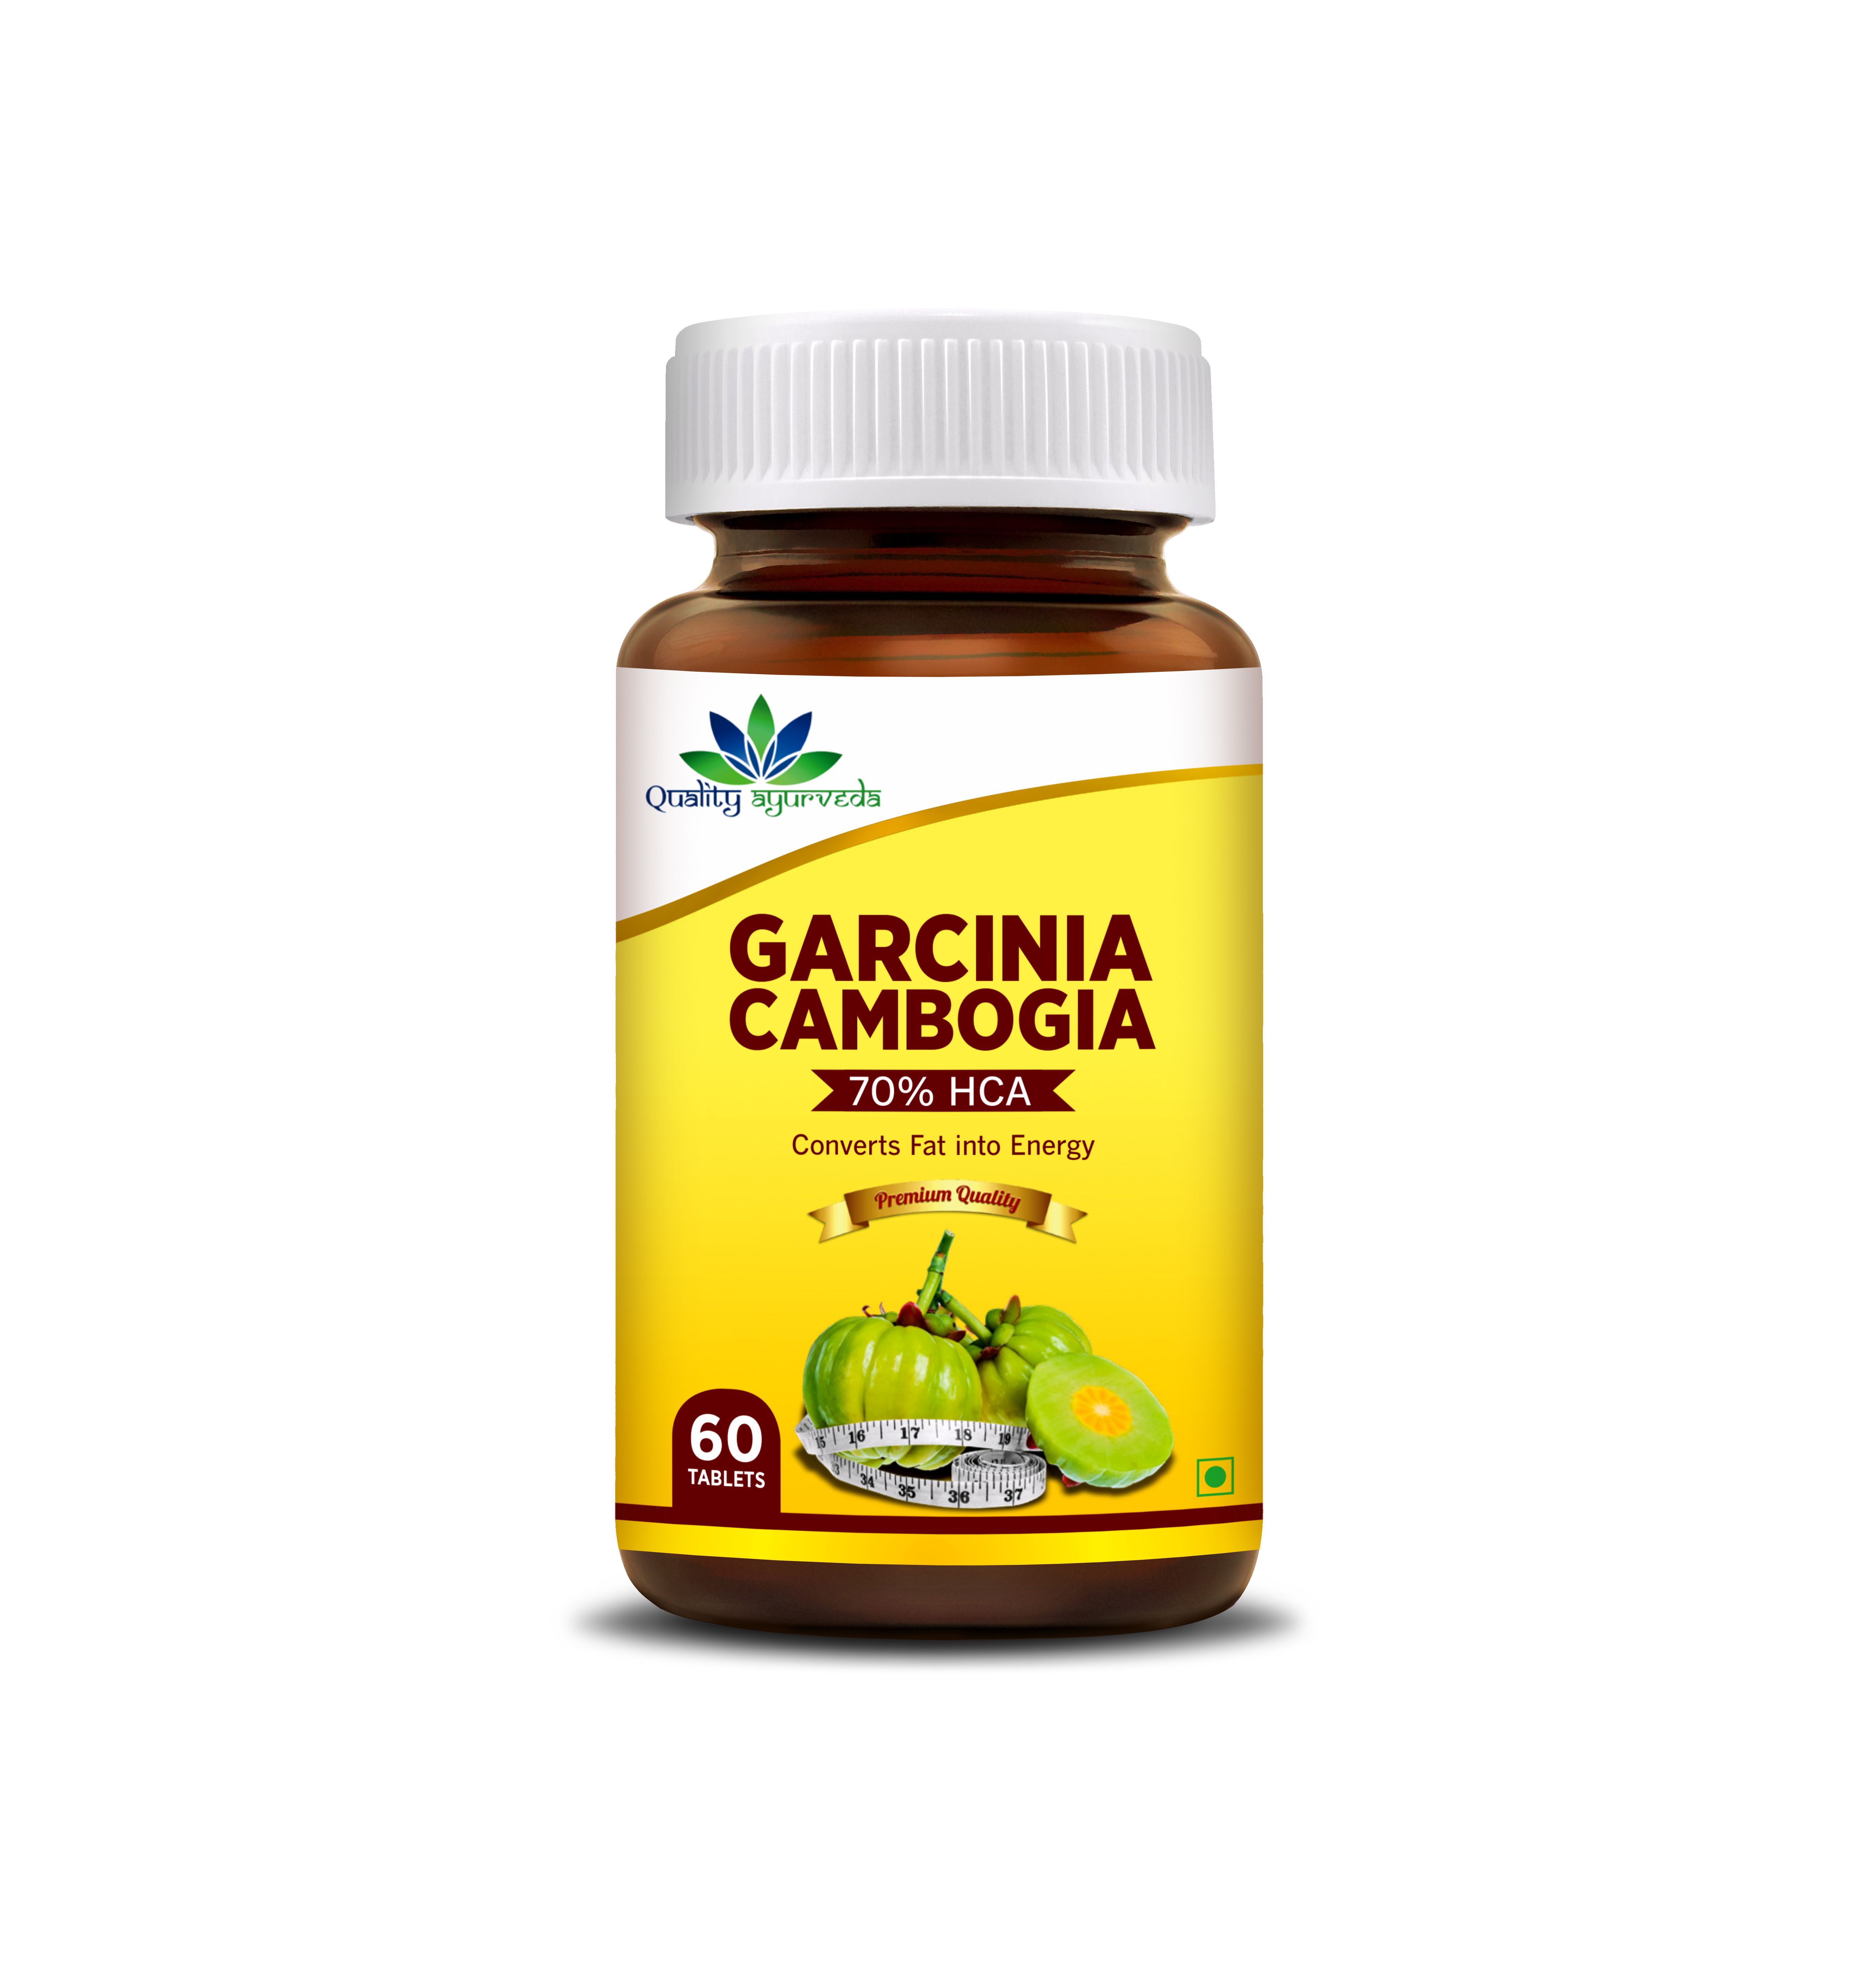 Quality Ayurveda Garcinia Cambogia - Converts Fat into Energy 1 mg ...